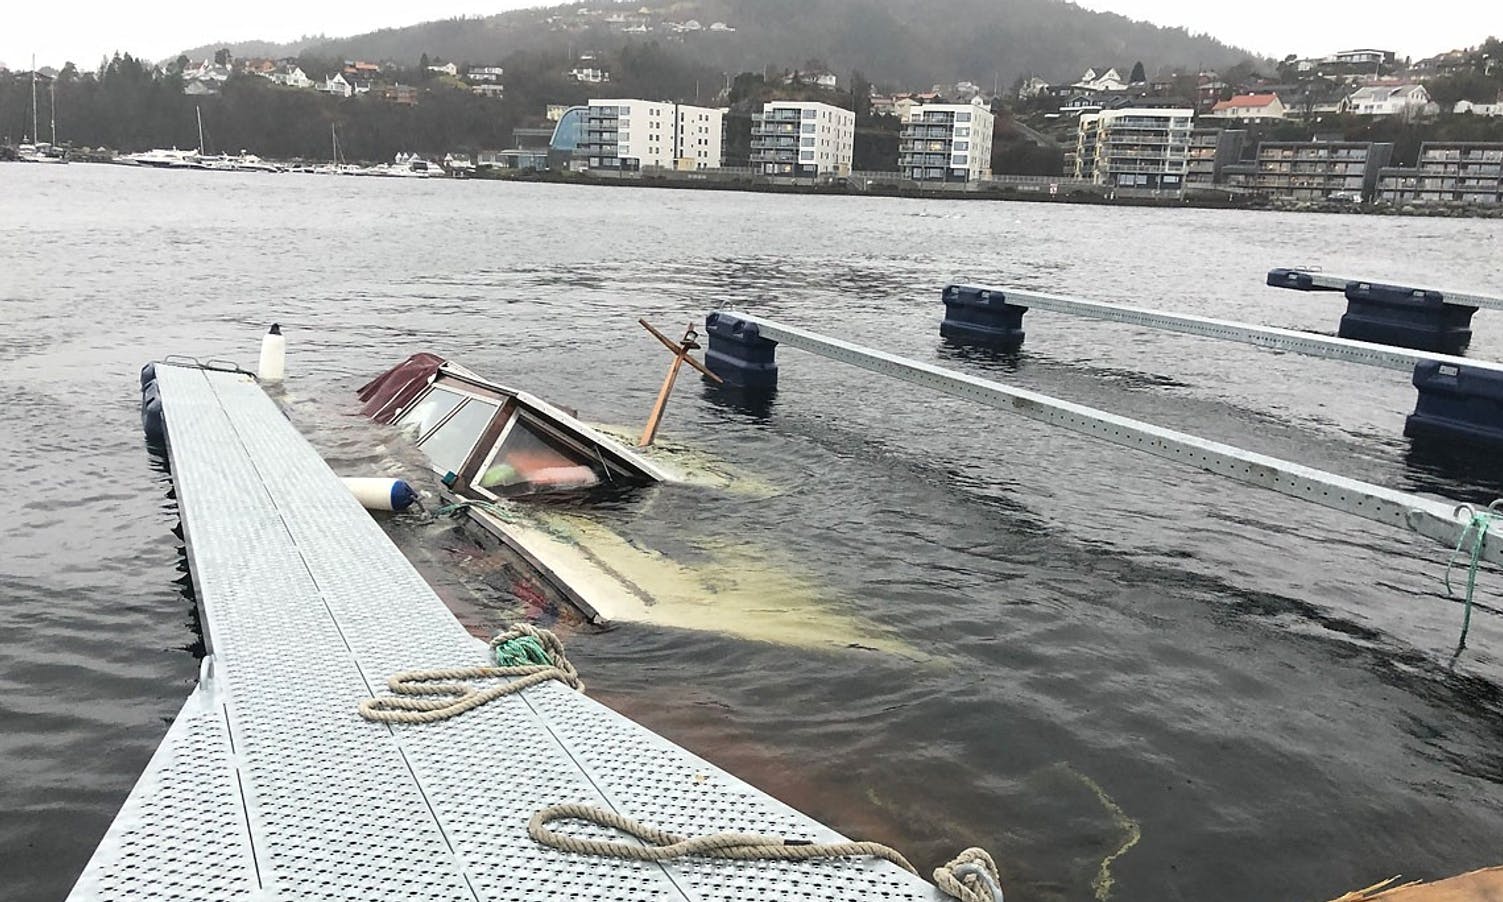 Båt gjekk ned - oljesøl i Os hamn